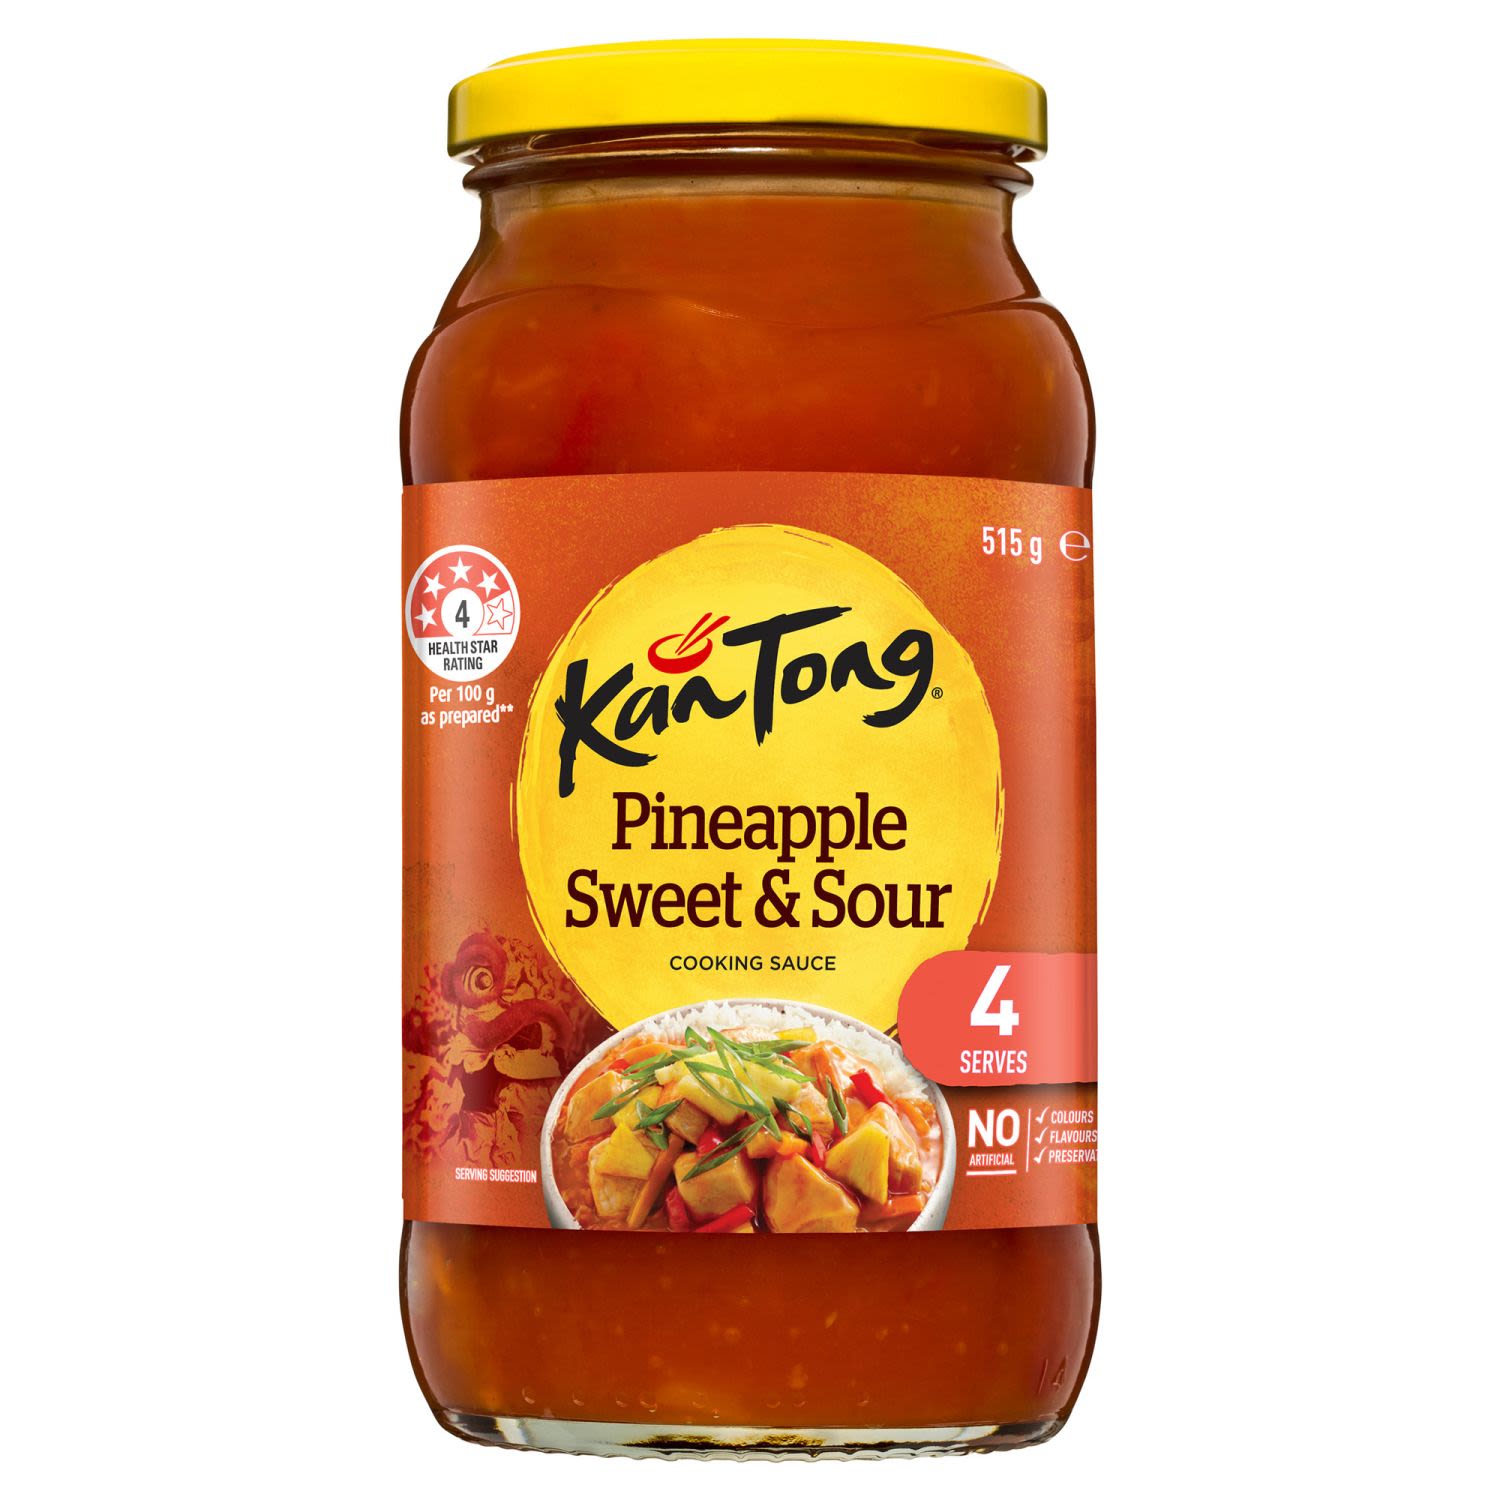 Kan Tong Pineapple Sweet & Sour Stir Fry Cooking Sauce, 515 Gram